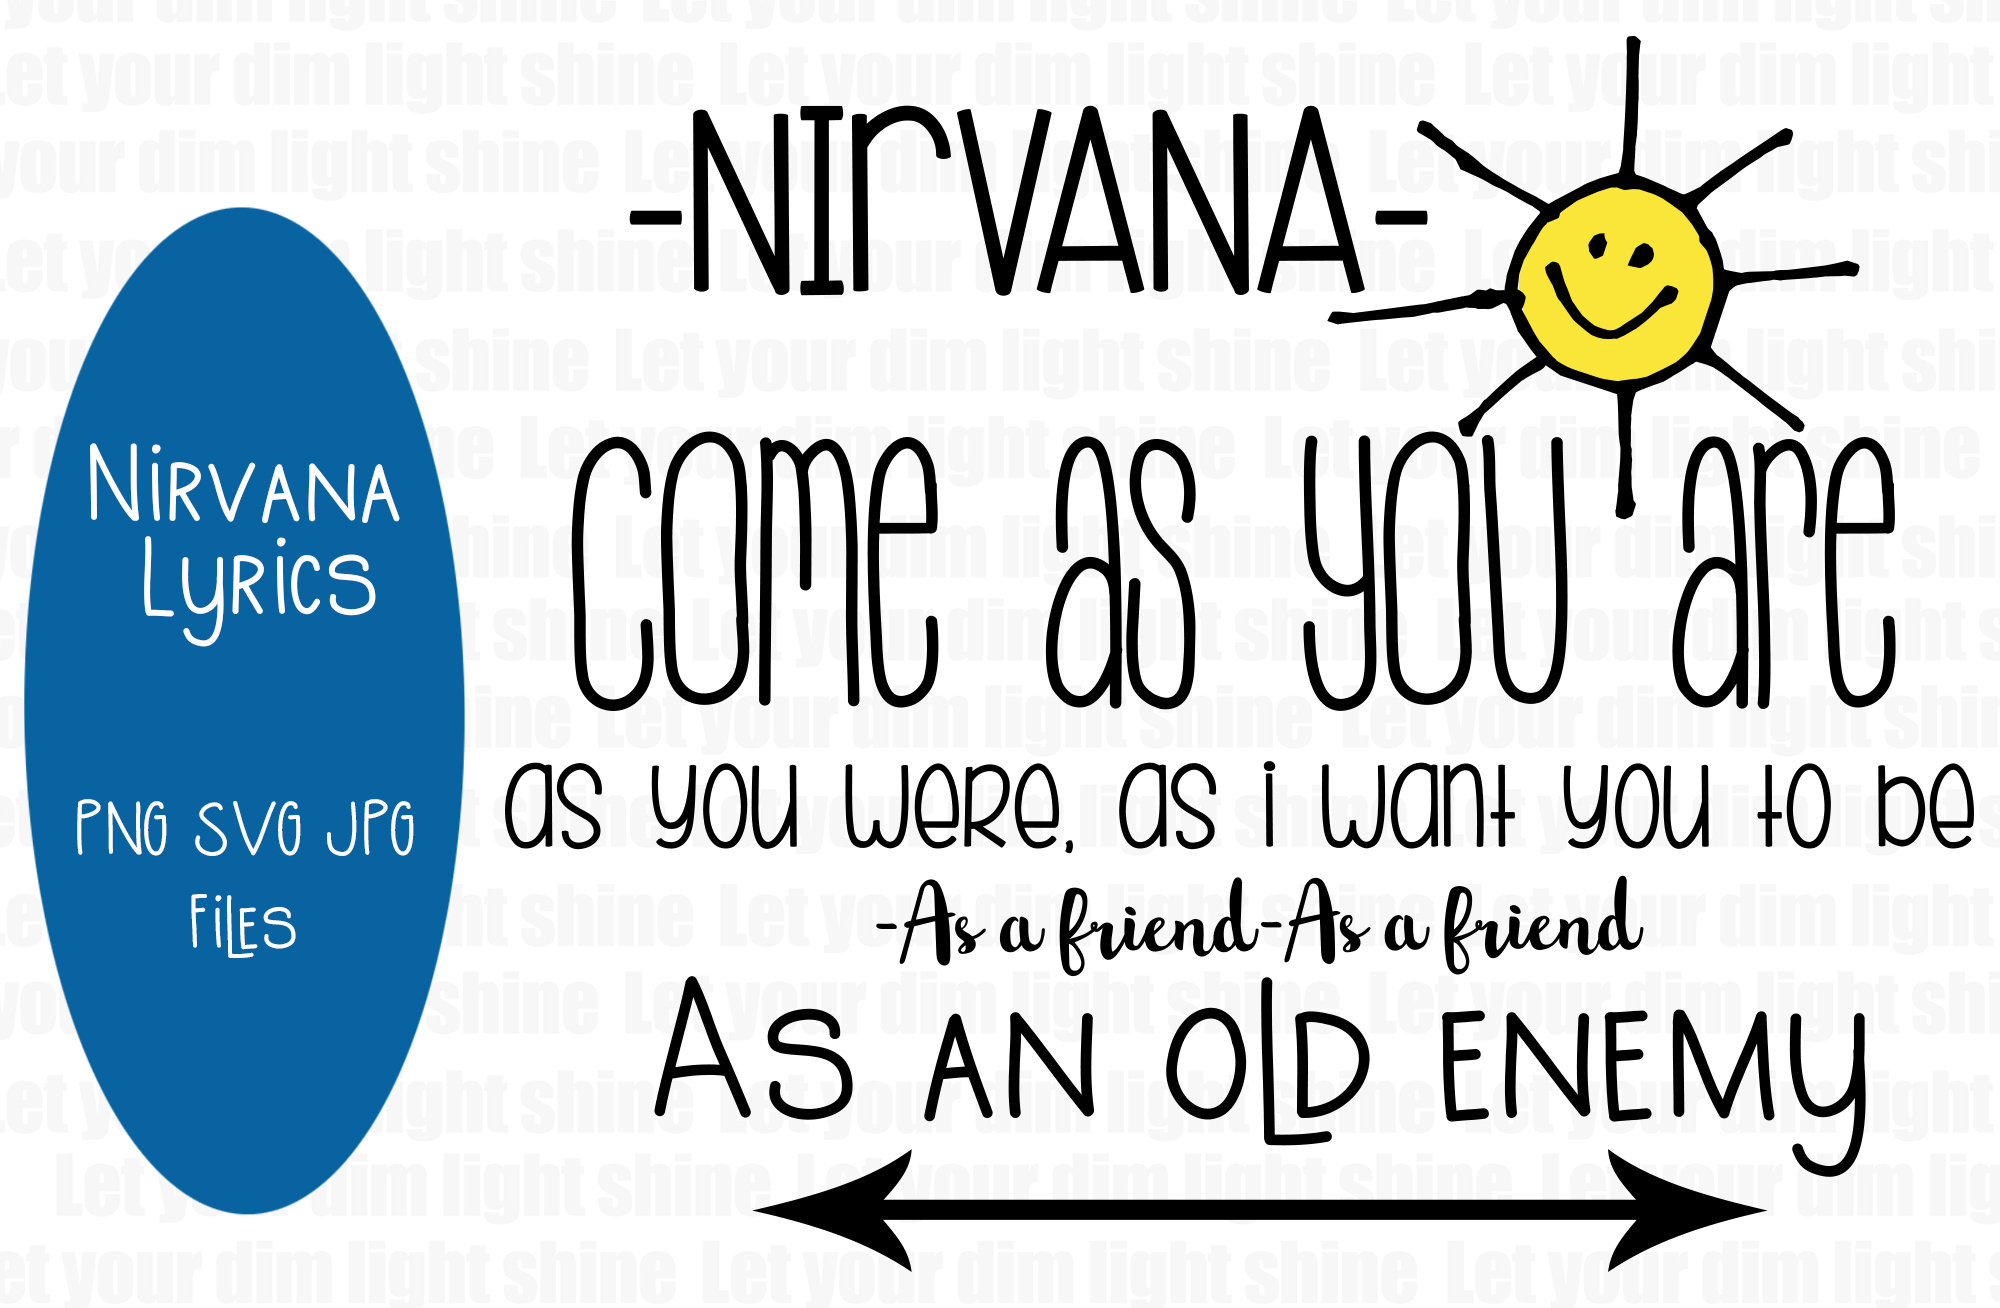 Nirvana lyrics. Nirvana come as you are Lyrics. Come as you are Lyrics. Nirvana come as you are. Come as you are.